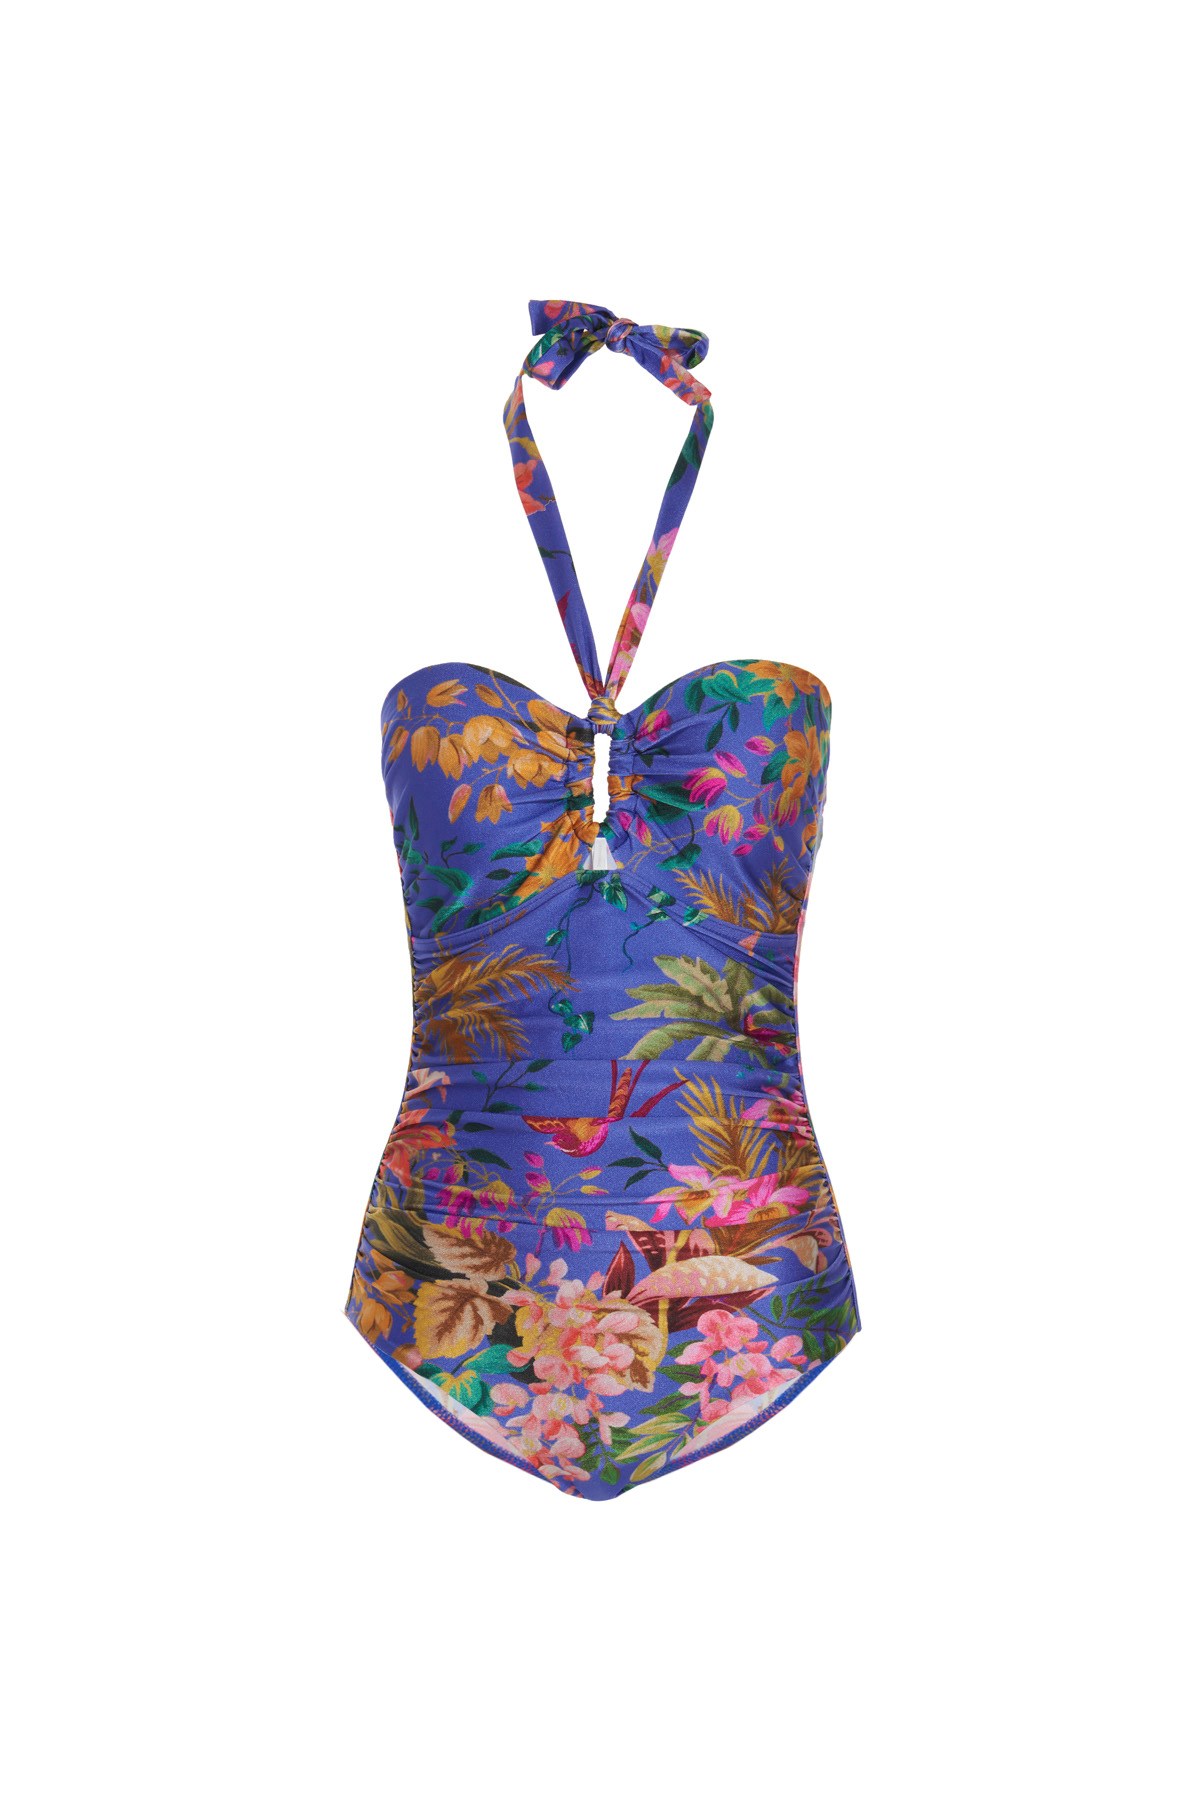 ZIMMERMANN ‘Tropicana’ One-Piece Swimsuit